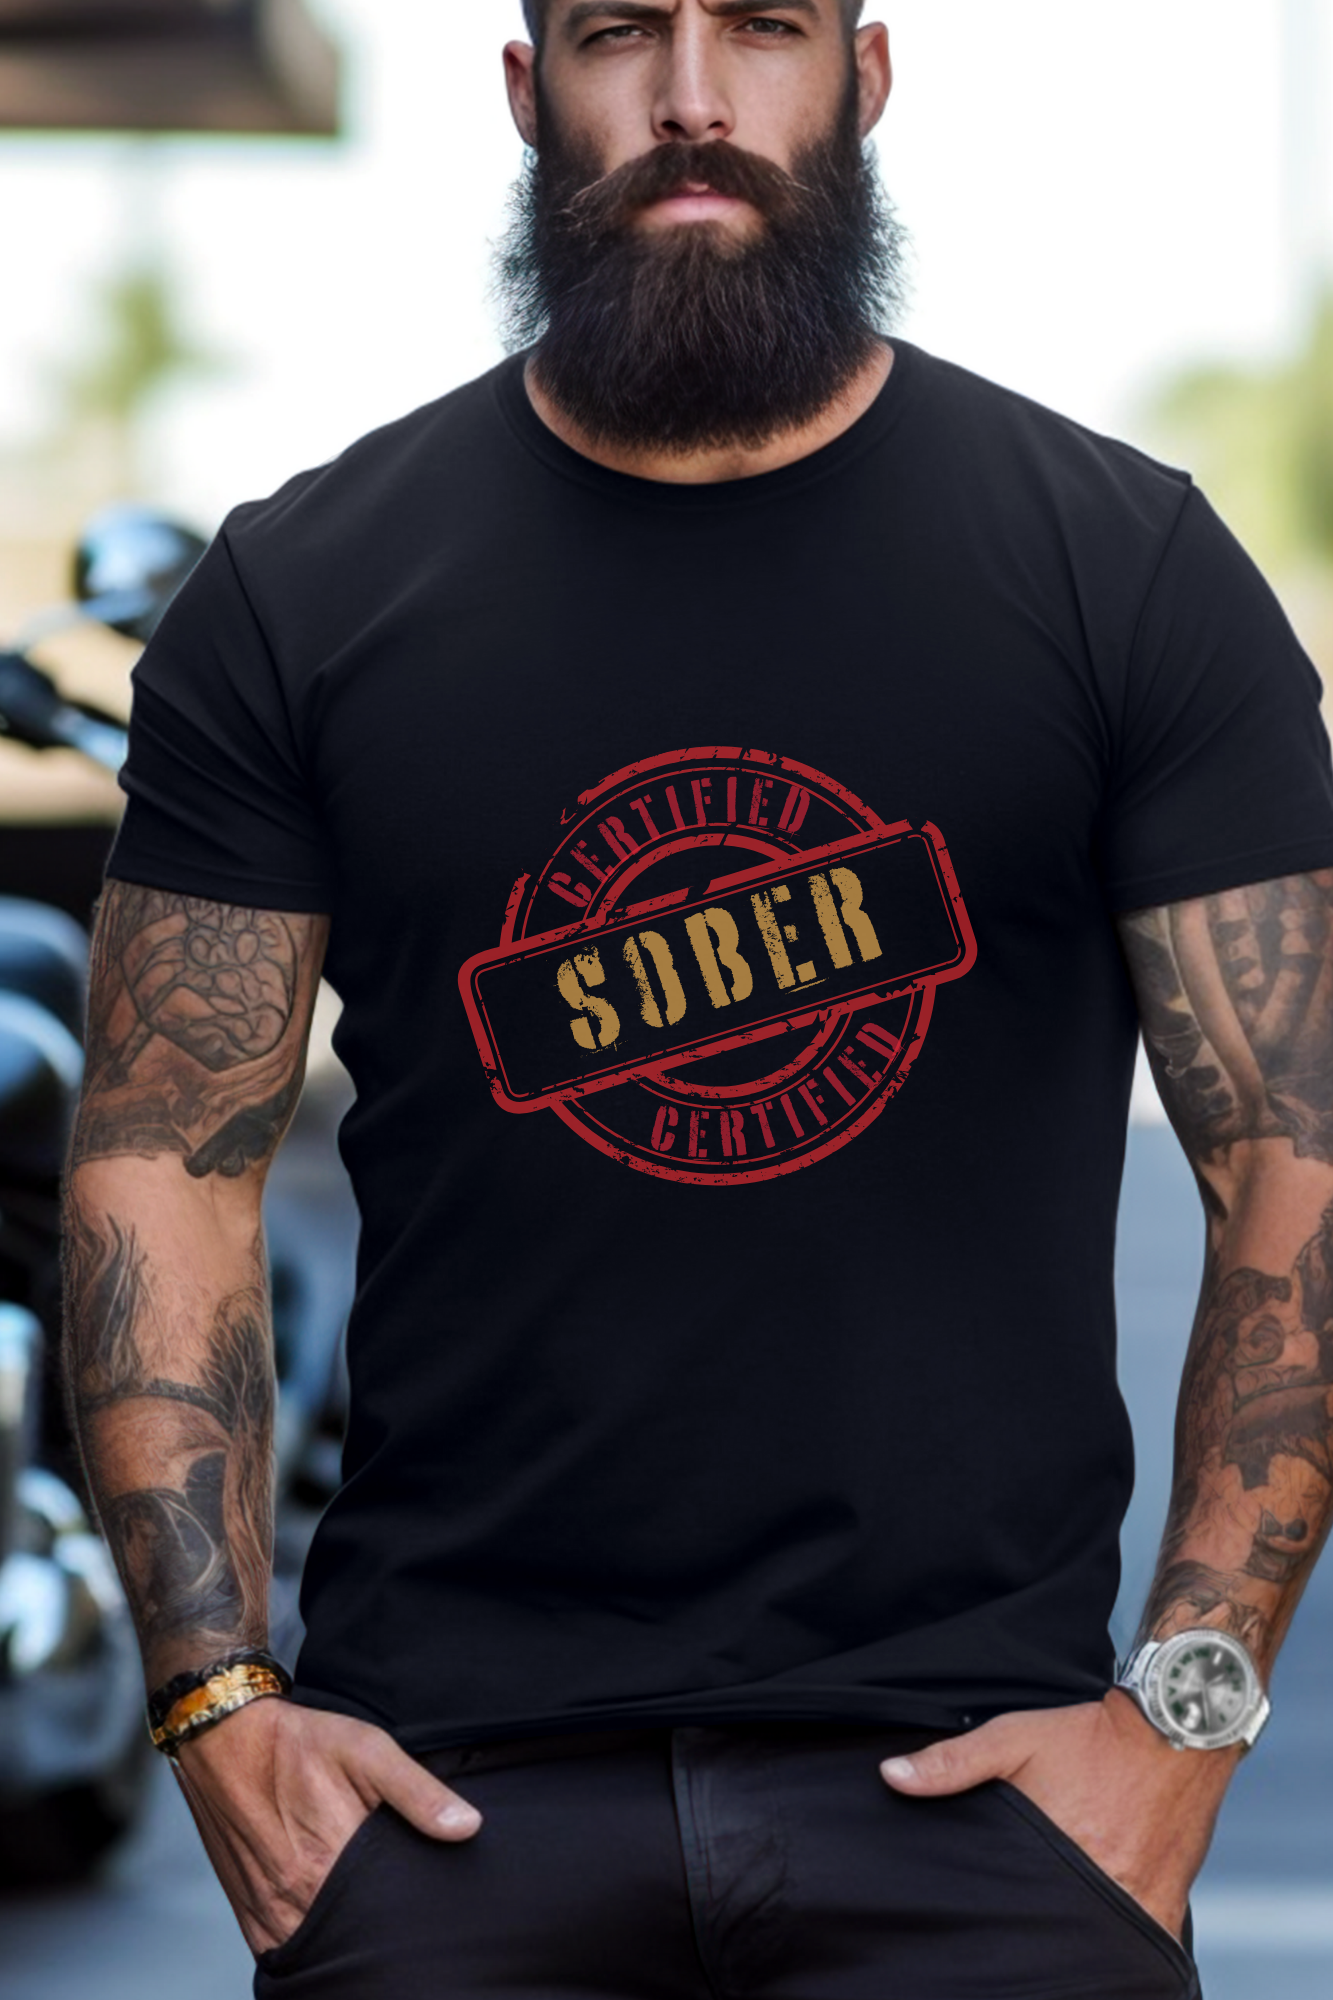 "Certified Sober" Unisex Tee Shirt